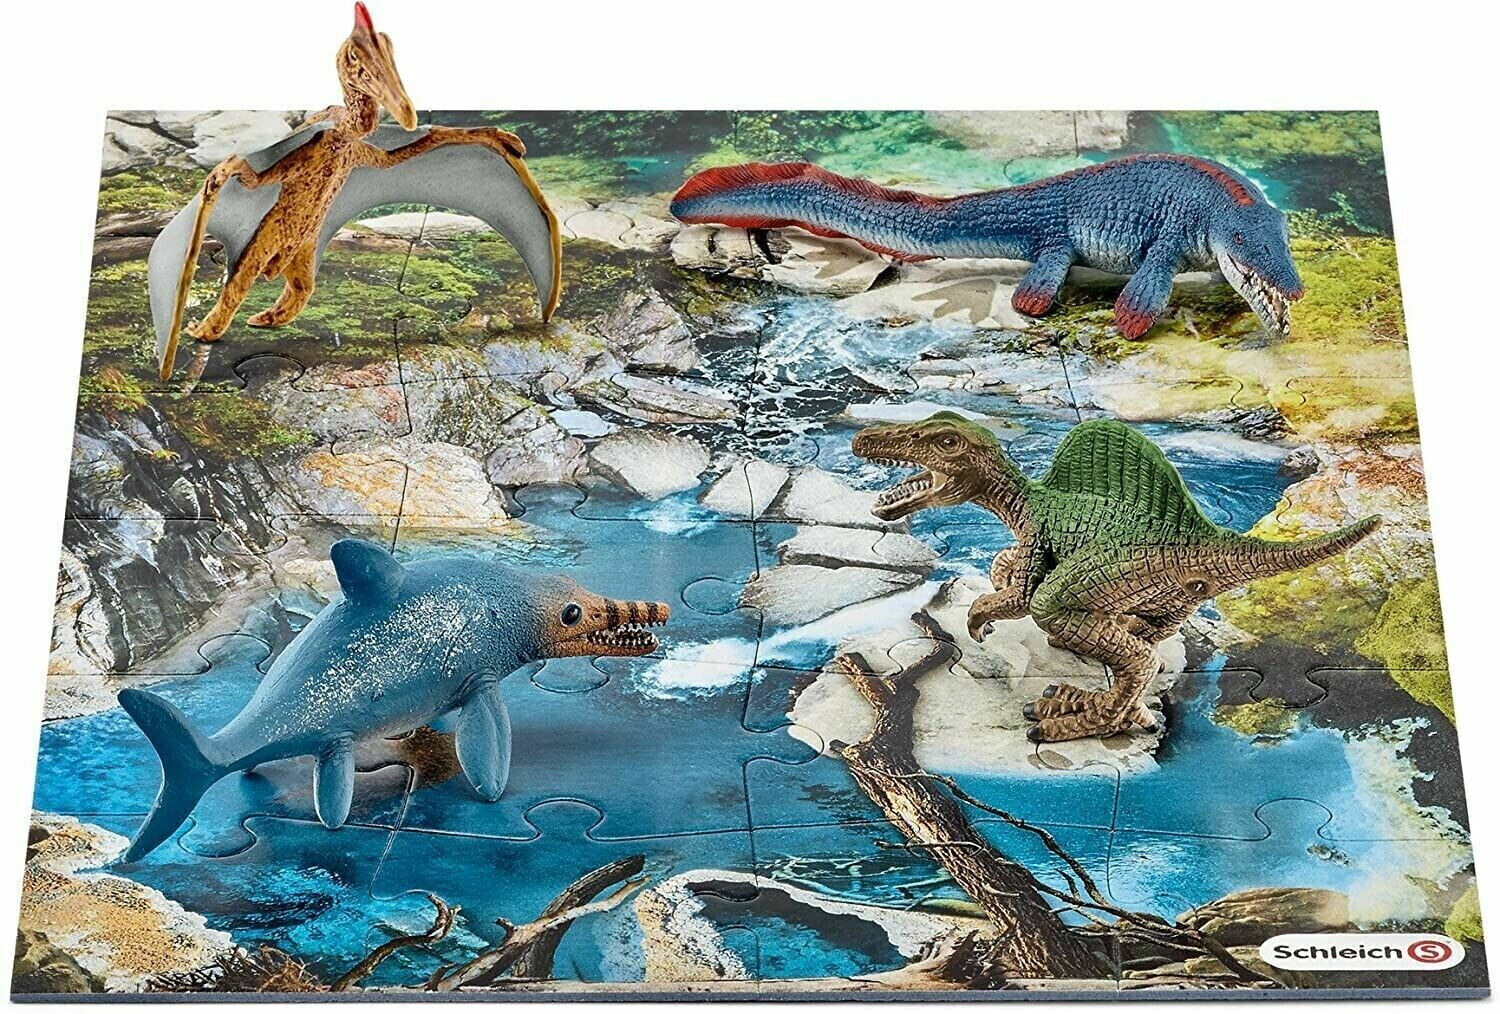 Schleich 4 Mini-Dinosaurs 42330 + Puzzle Waterhole habitat NEW SEALED PLAY SET